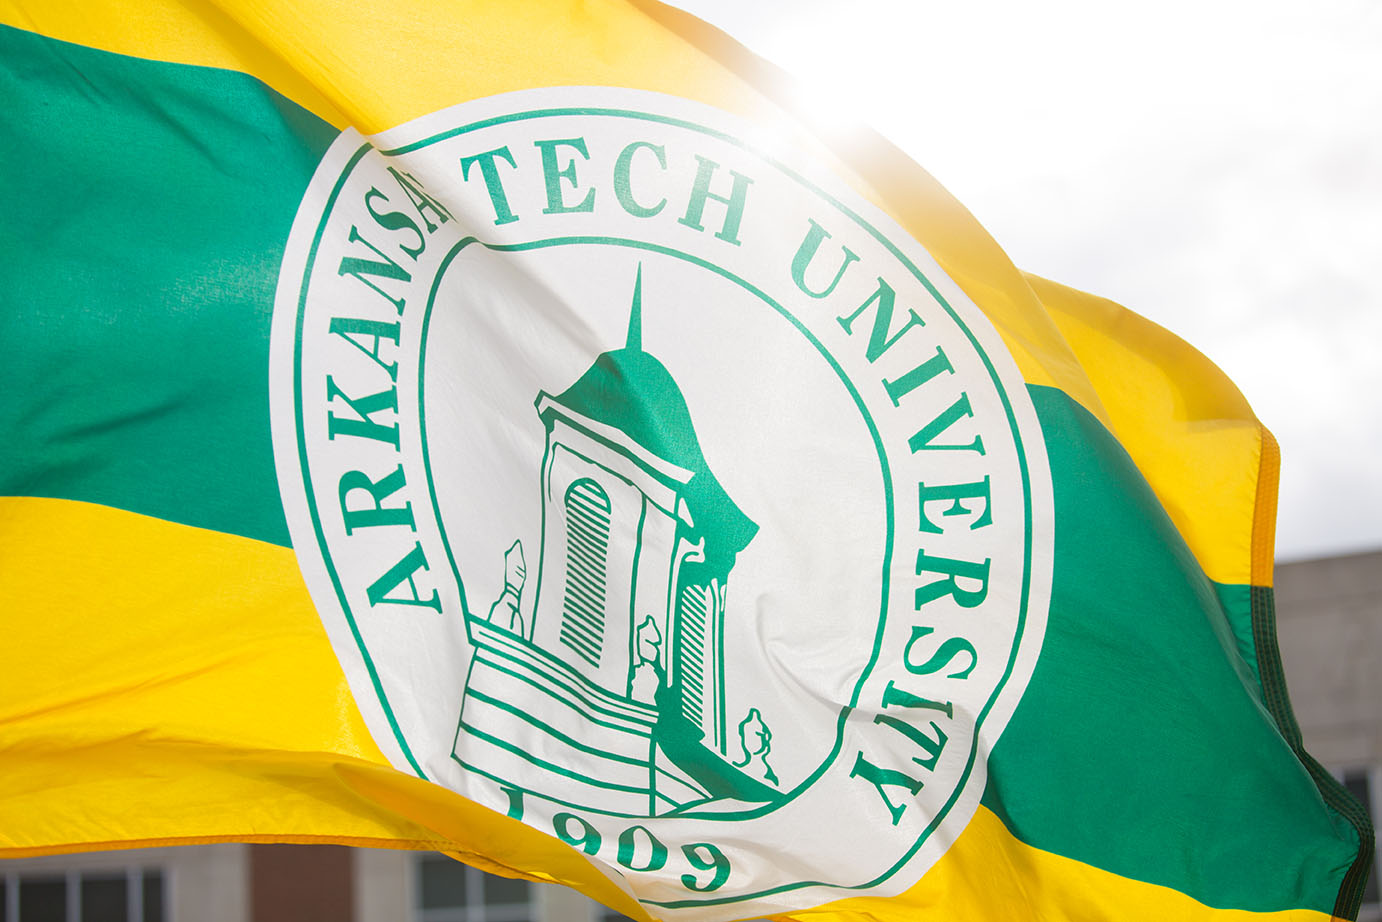  The Arkansas Tech University flag waving in the wind